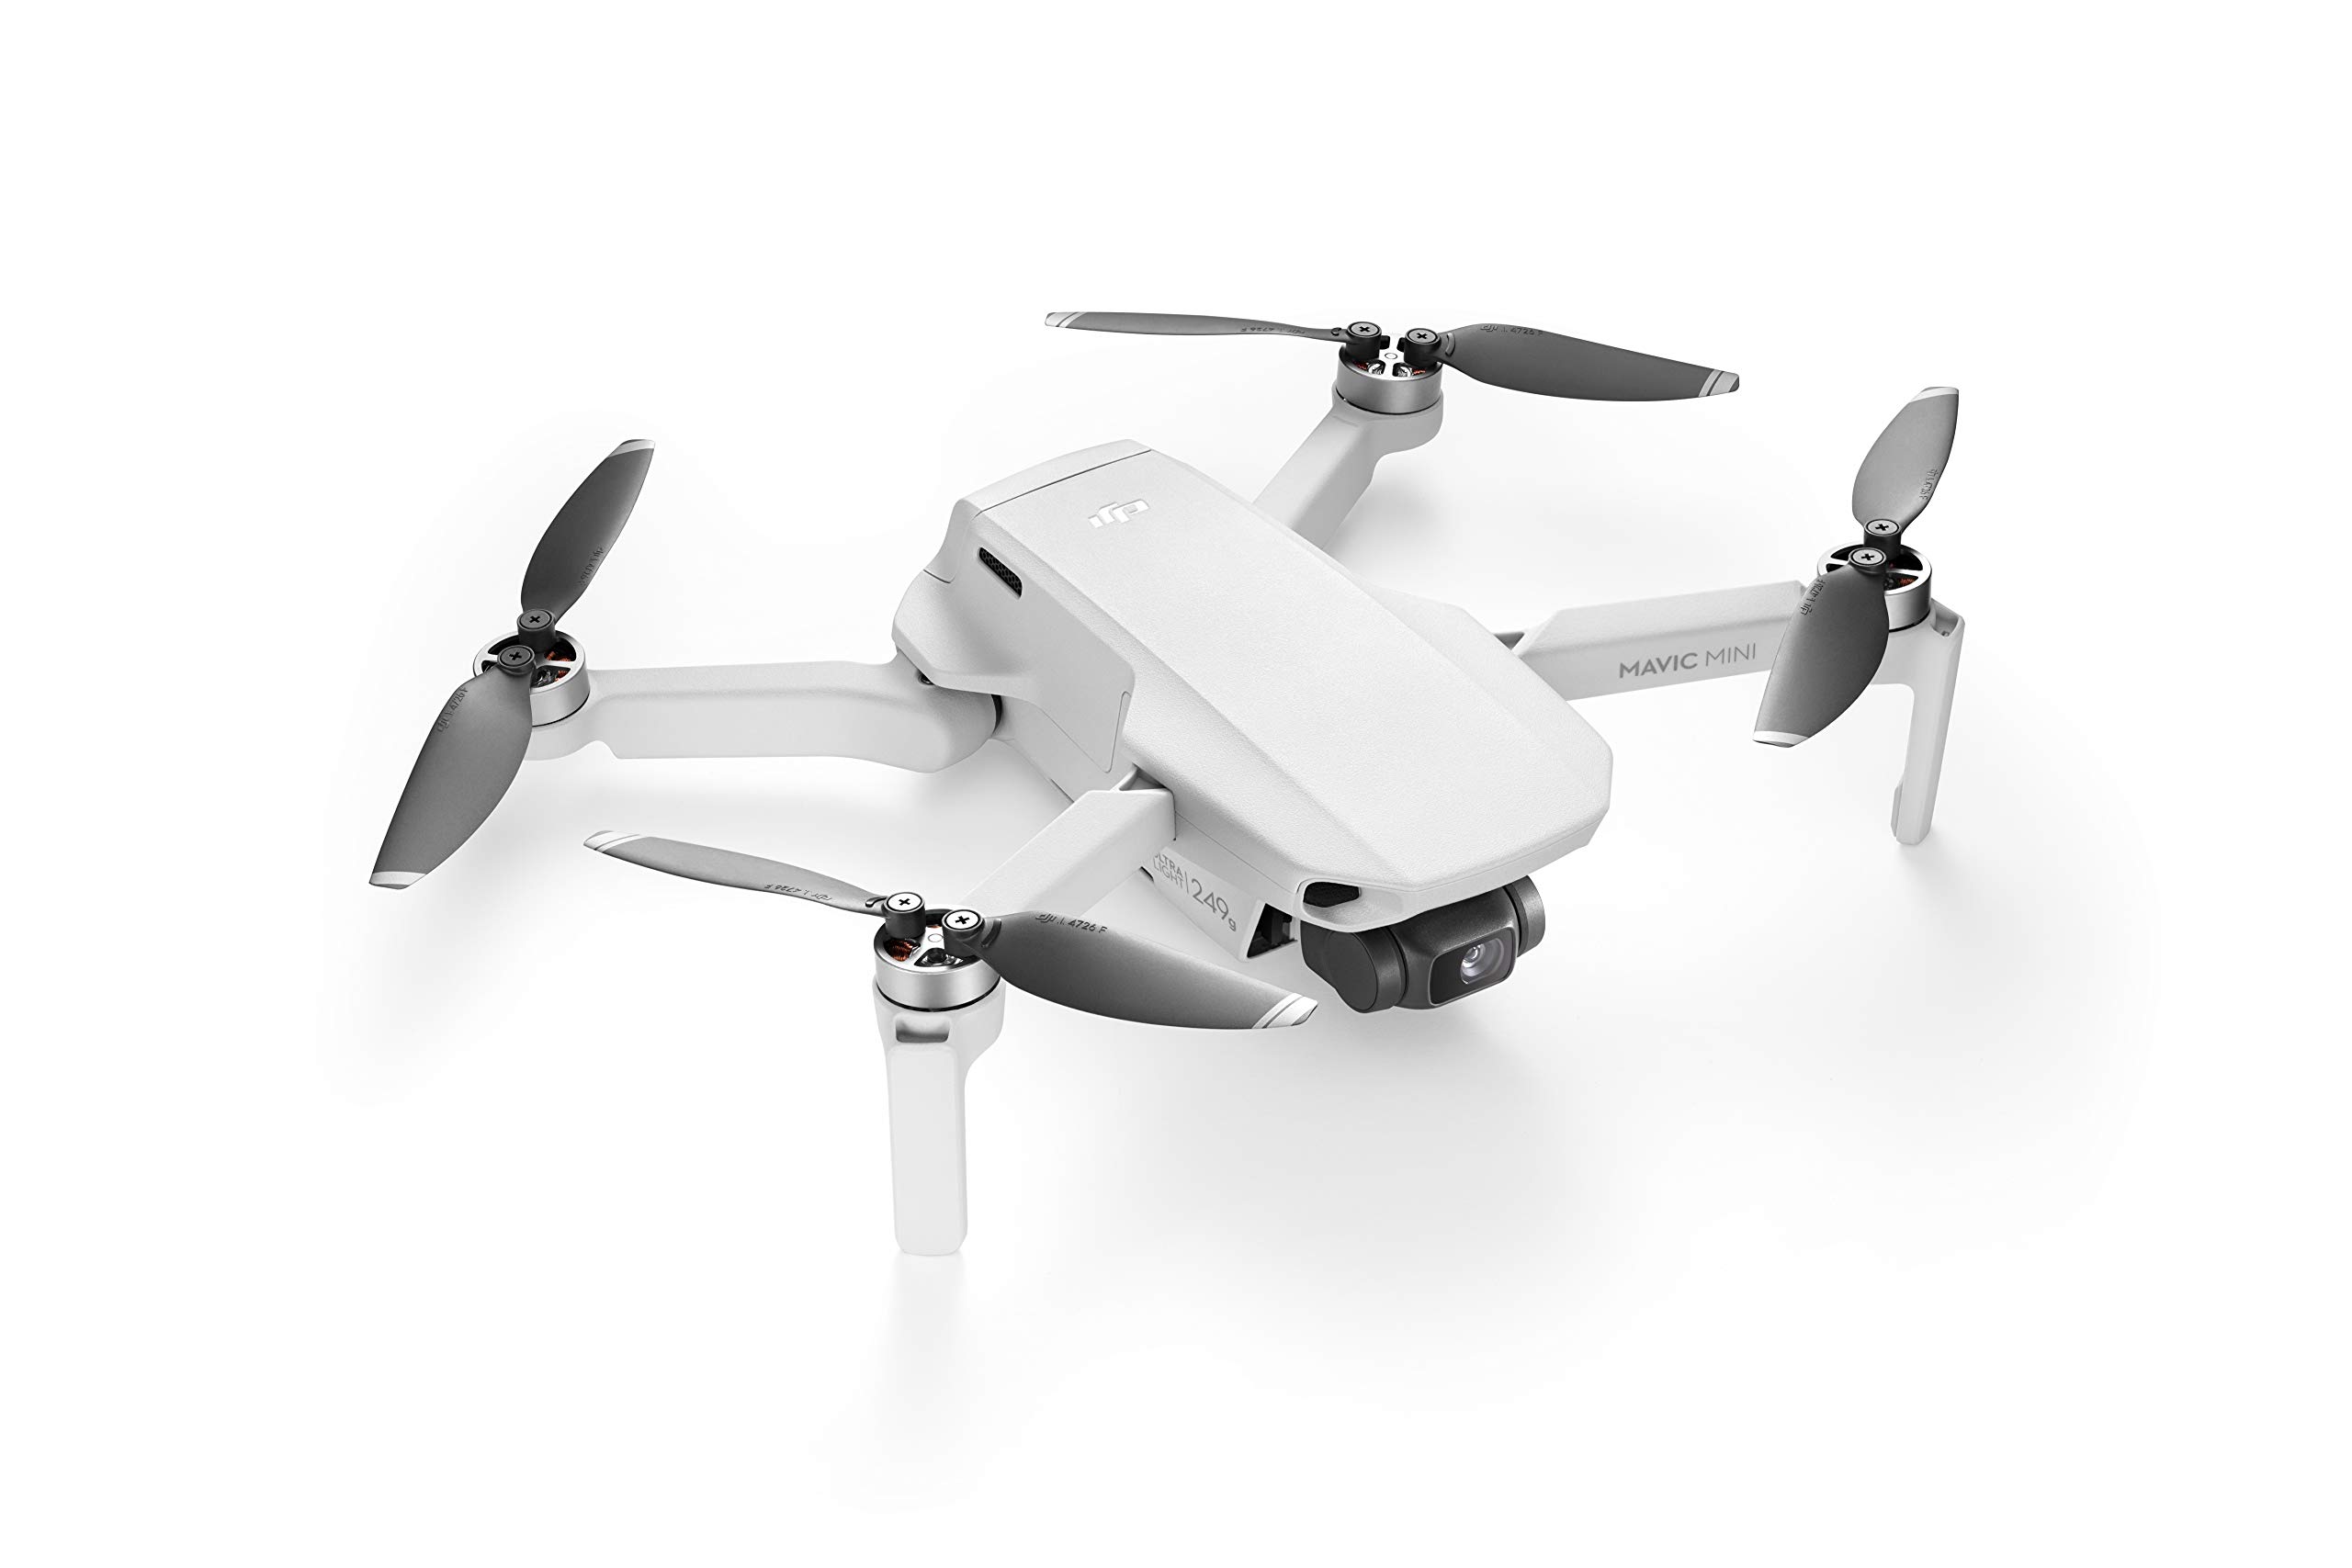 DJI Mavic Mini Combo - Drone FlyCam Quadcopter UAV with 2.7K Camera 3-Axis Gimbal GPS 30min Flight Time, less than 0.55lbs, Gray